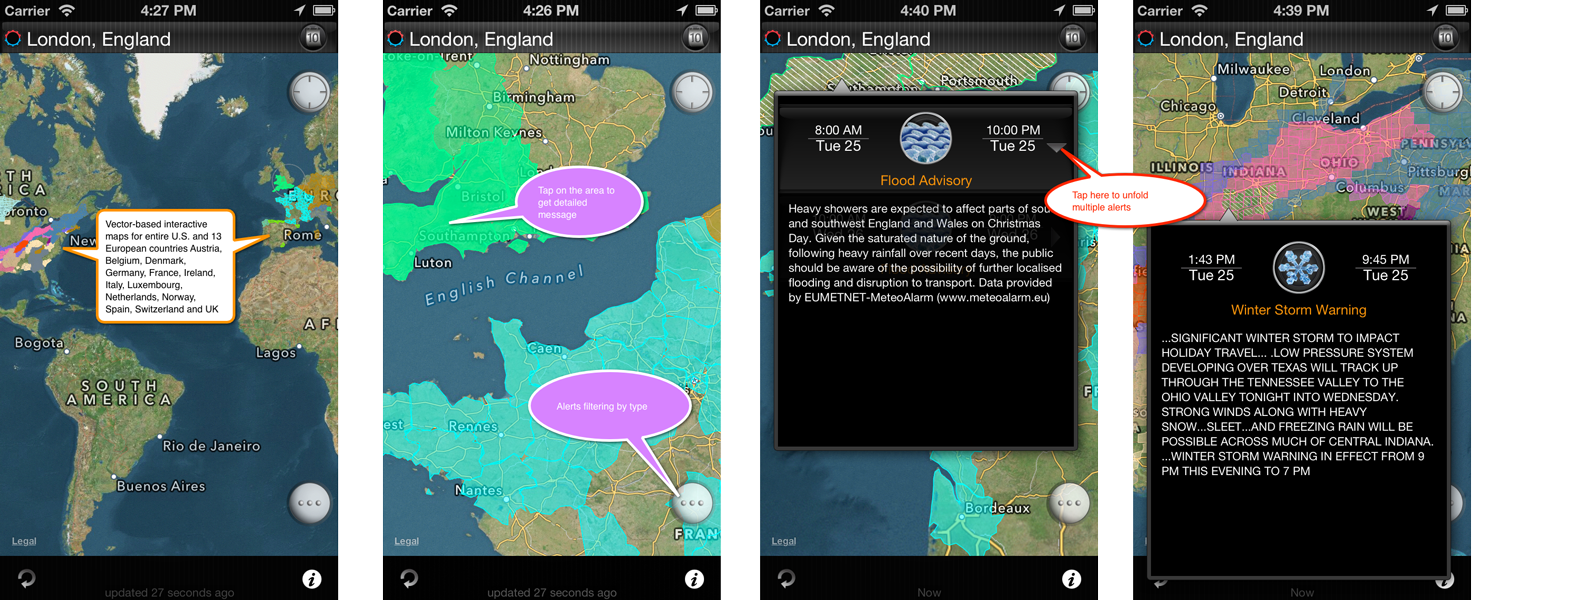 eWeather hd severe weather app iphone,ipad,ipod hi-def radar, satellite, weather alerts, earthquakes, beach water, sea surface - radarview